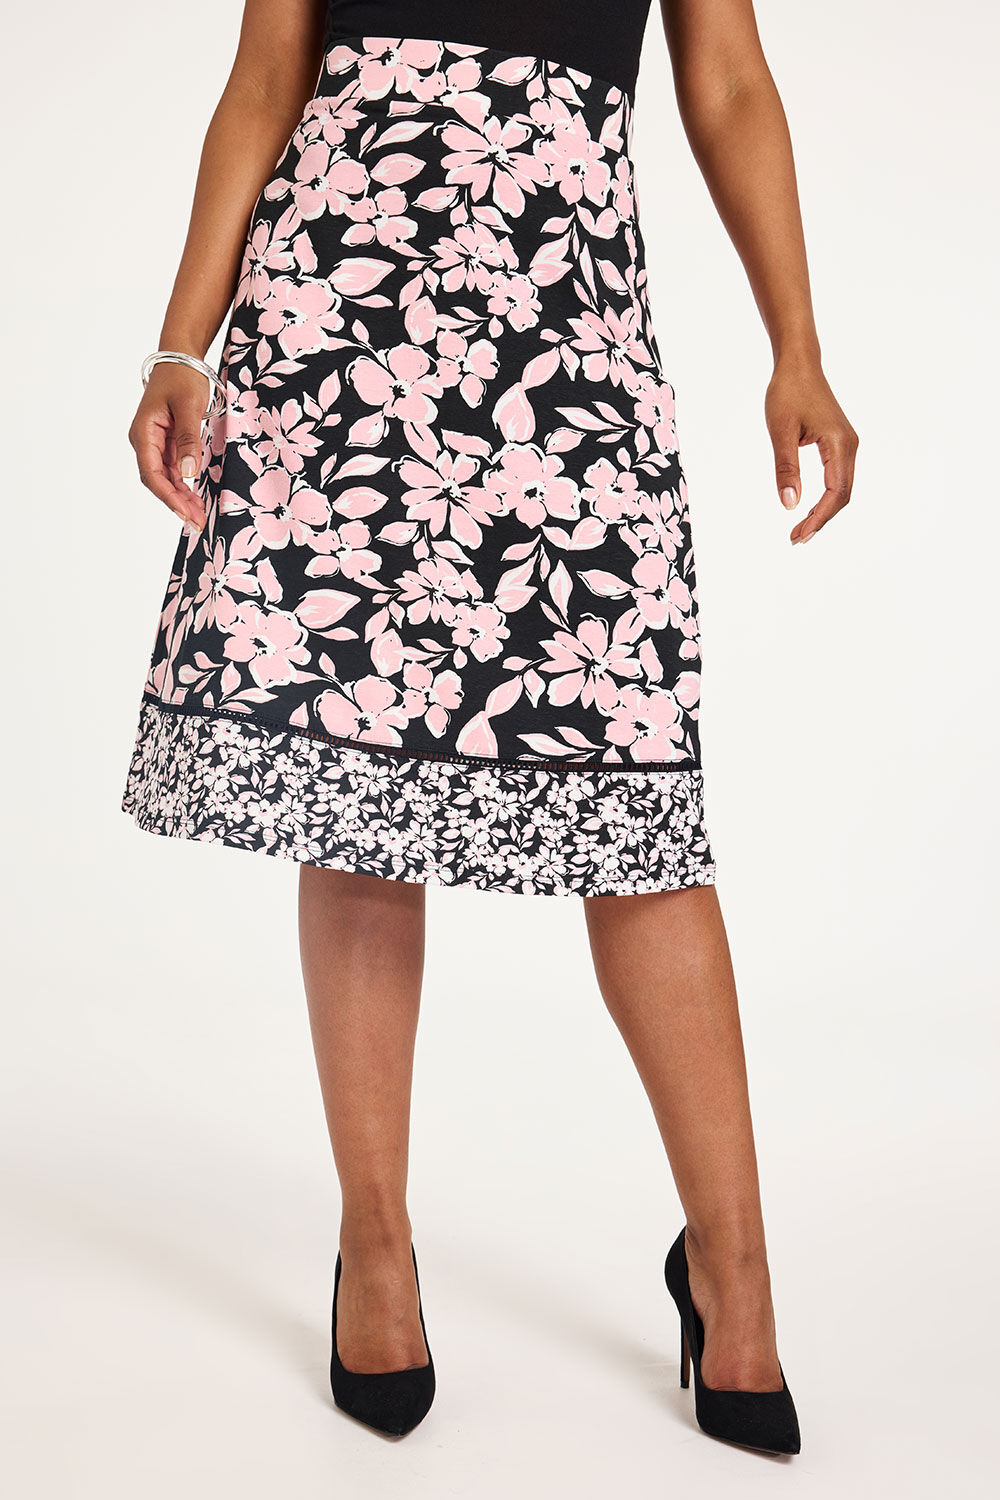 Bonmarche Black Floral Border Print A-Line Jersey Skirt, Size: 14